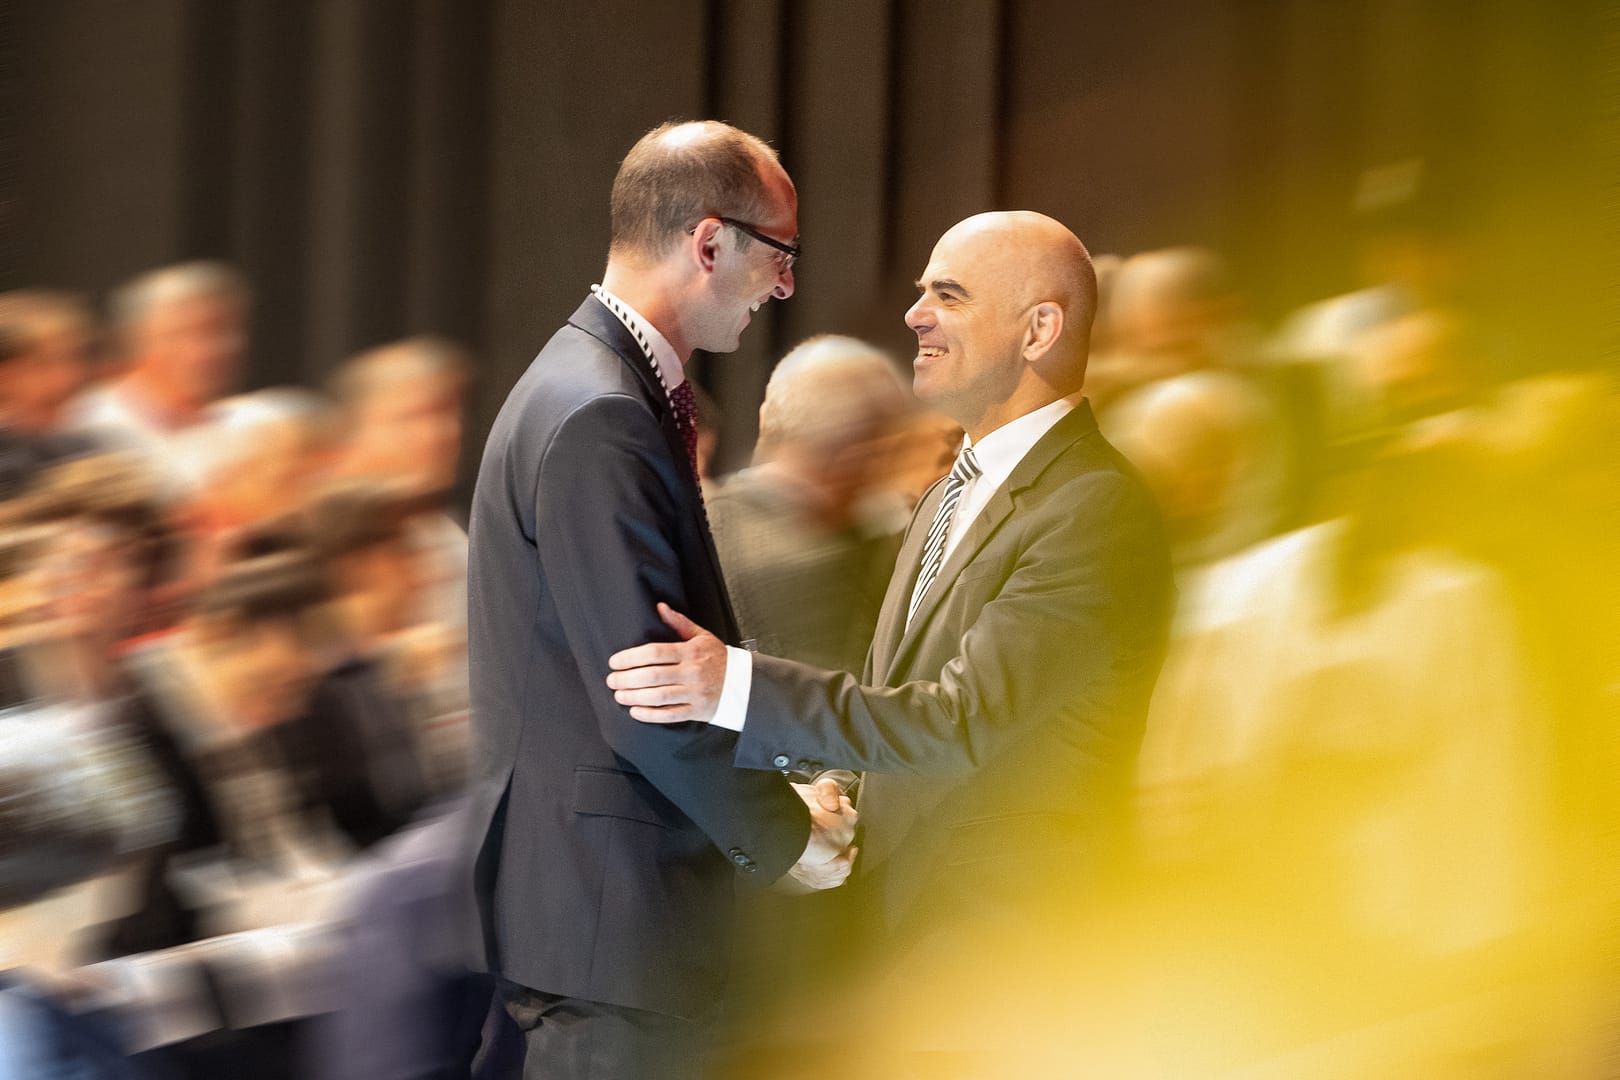 Handshake de présidents - Martin Candinas et Alain Berset Equilibre Fribourg, 15.12.2022. Photo: STEMUTZ.COM